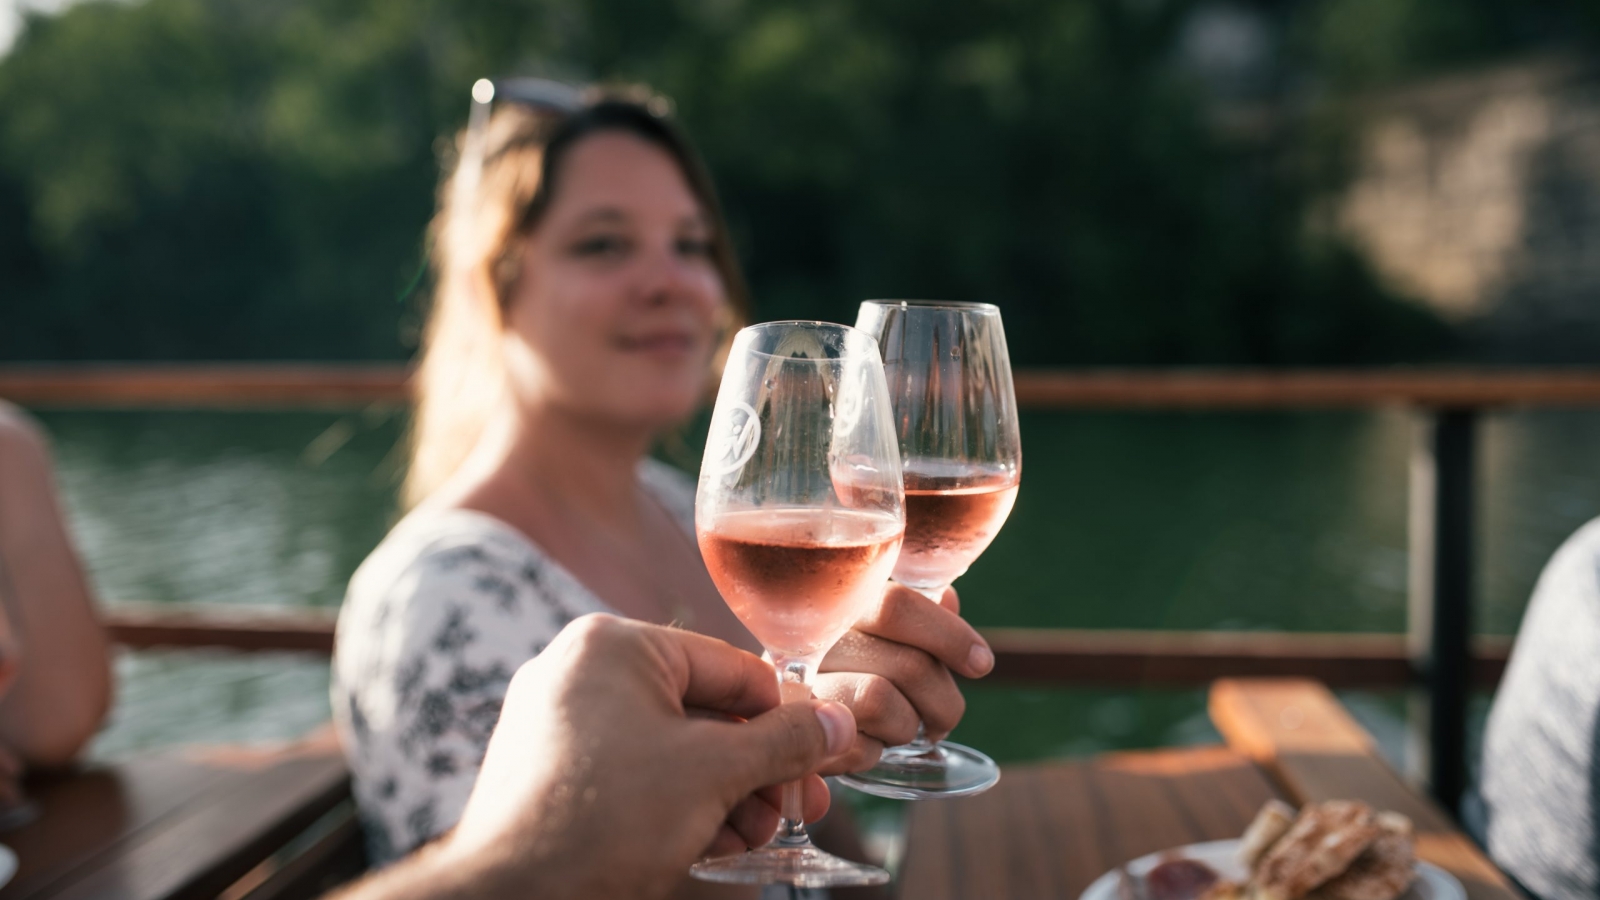 dégustation de vins de Gaillac, balade en gabarre sur le Tarn, apéro en bateau